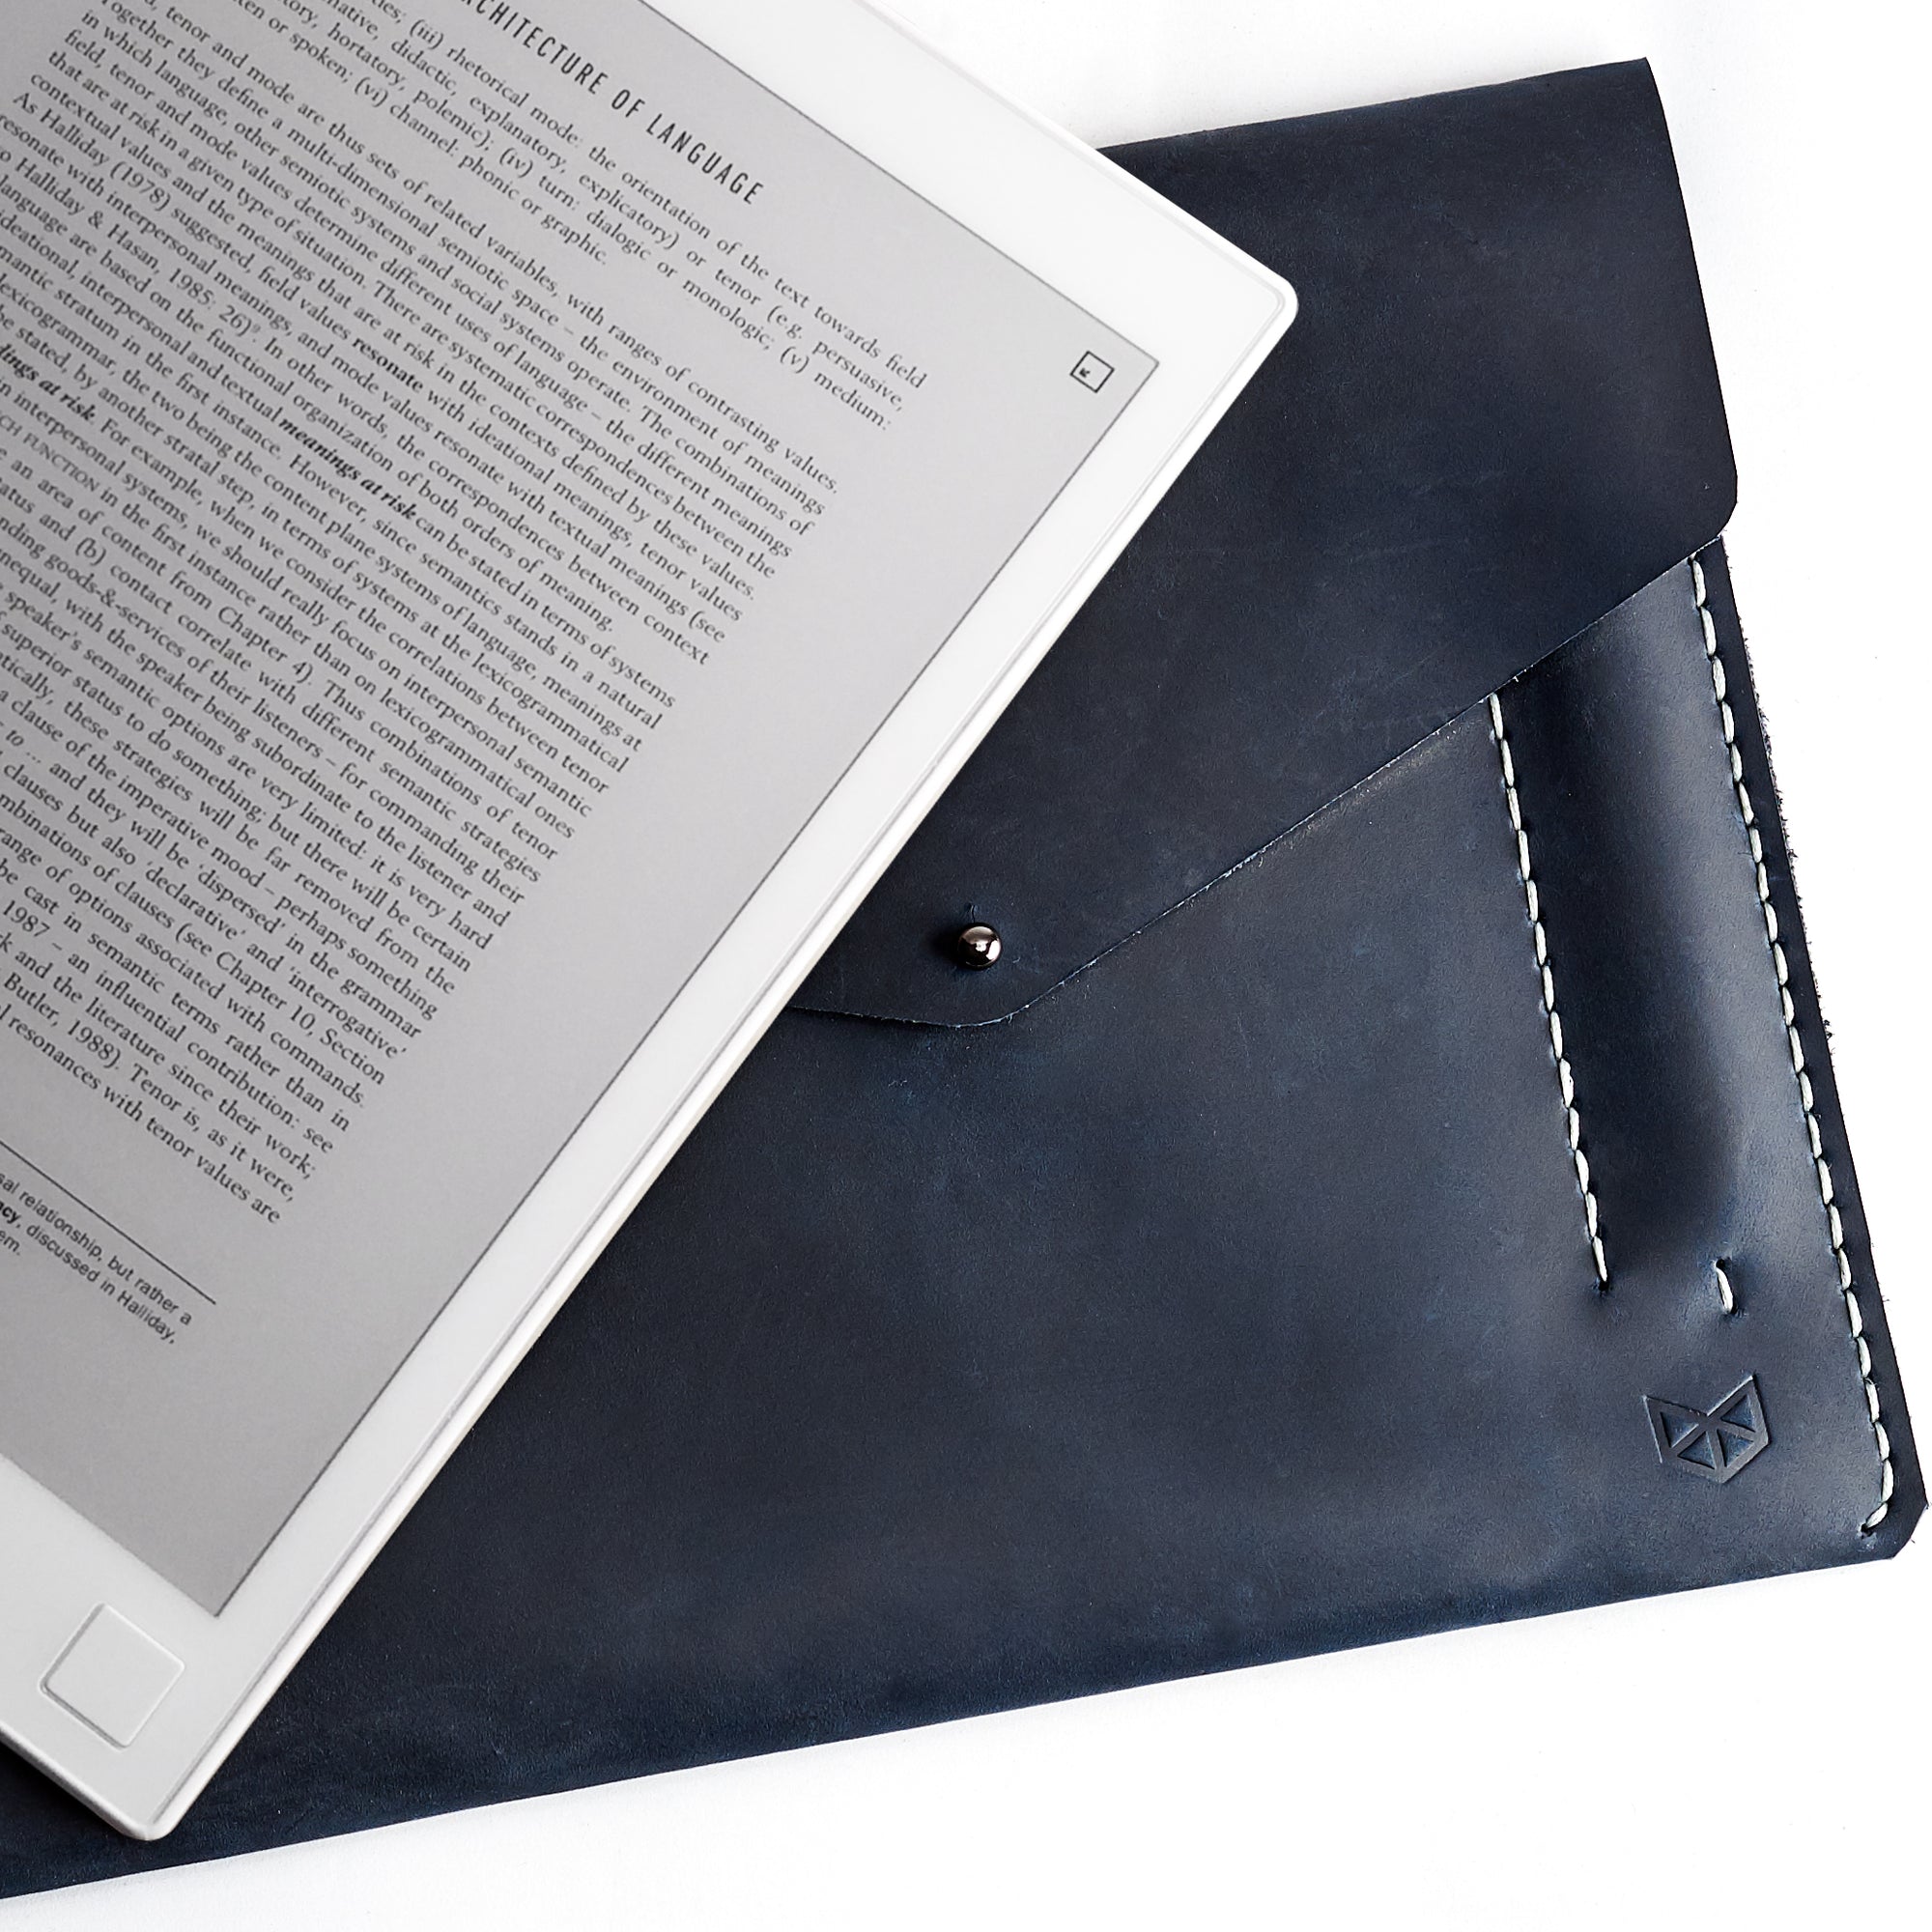 Unique Blue handcrafted leather reMarkable tablet case. Folio with Marker holder. Paper E-ink tablet minimalist sleeve design. 